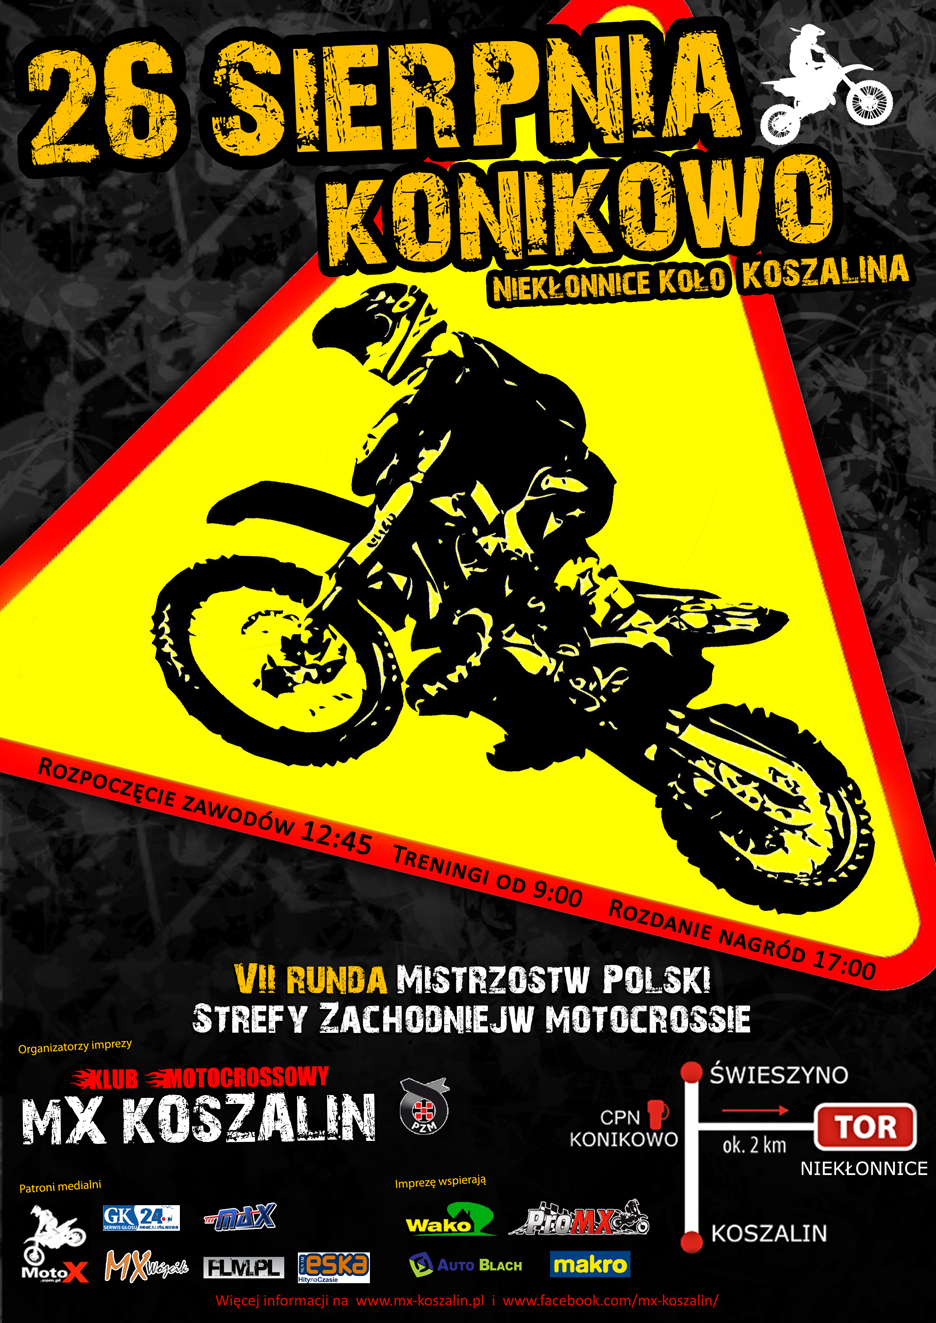 Mx-Koszalin Konikowo Lucjan Morawski